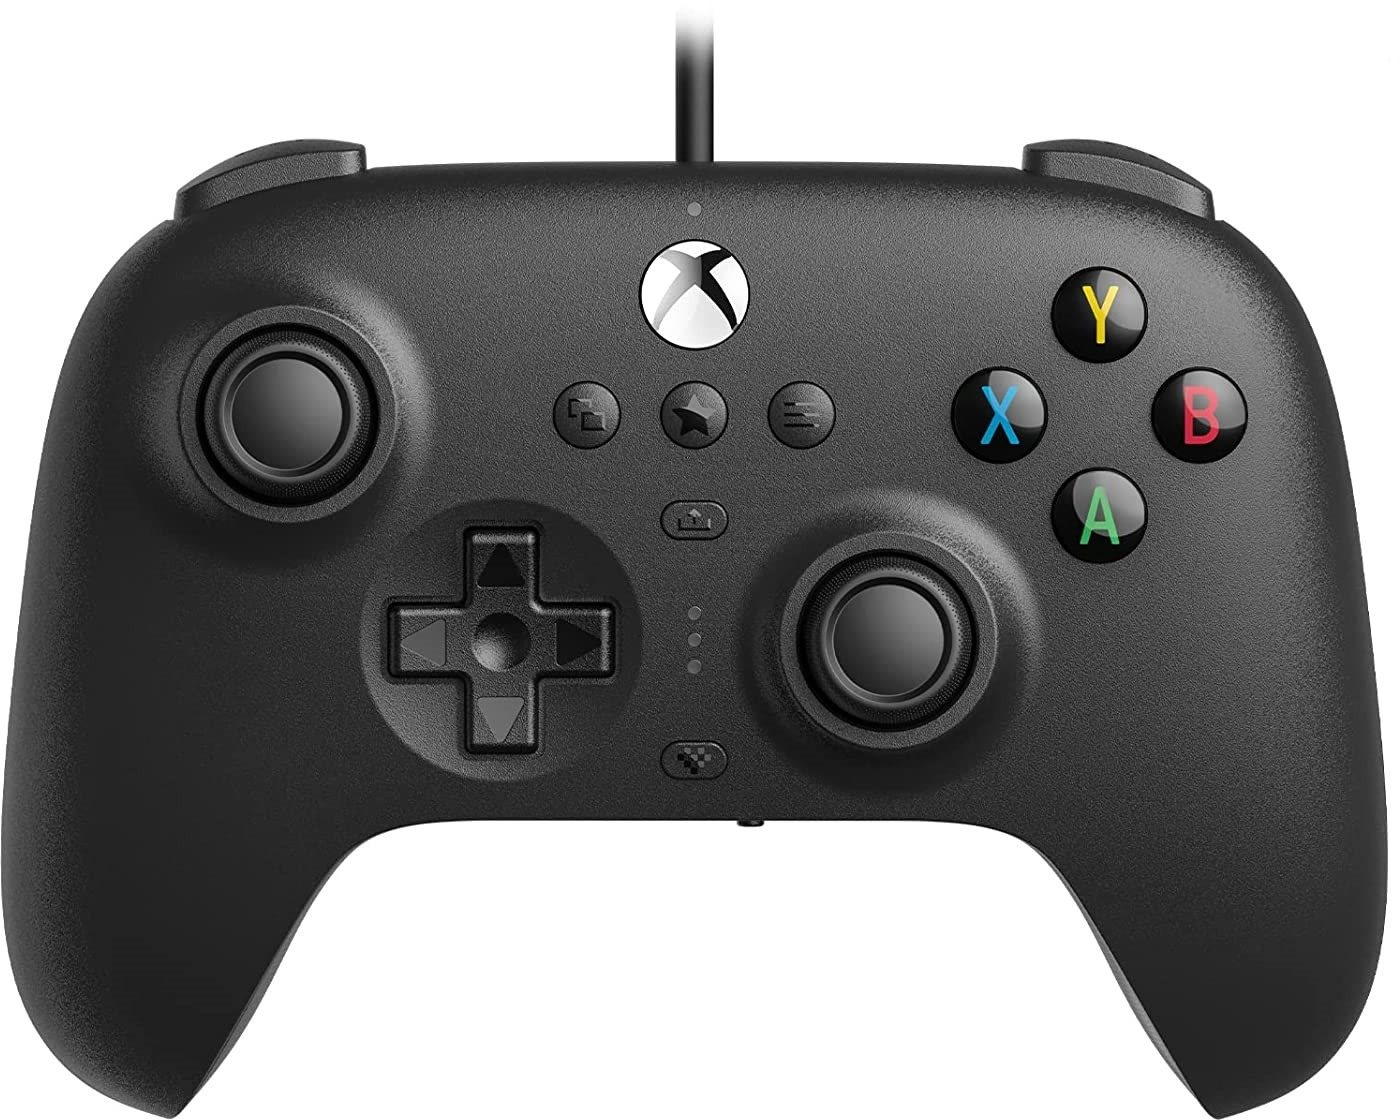 Kontroller 8BitDo Ultimate Wired Controller - Black - Xbox